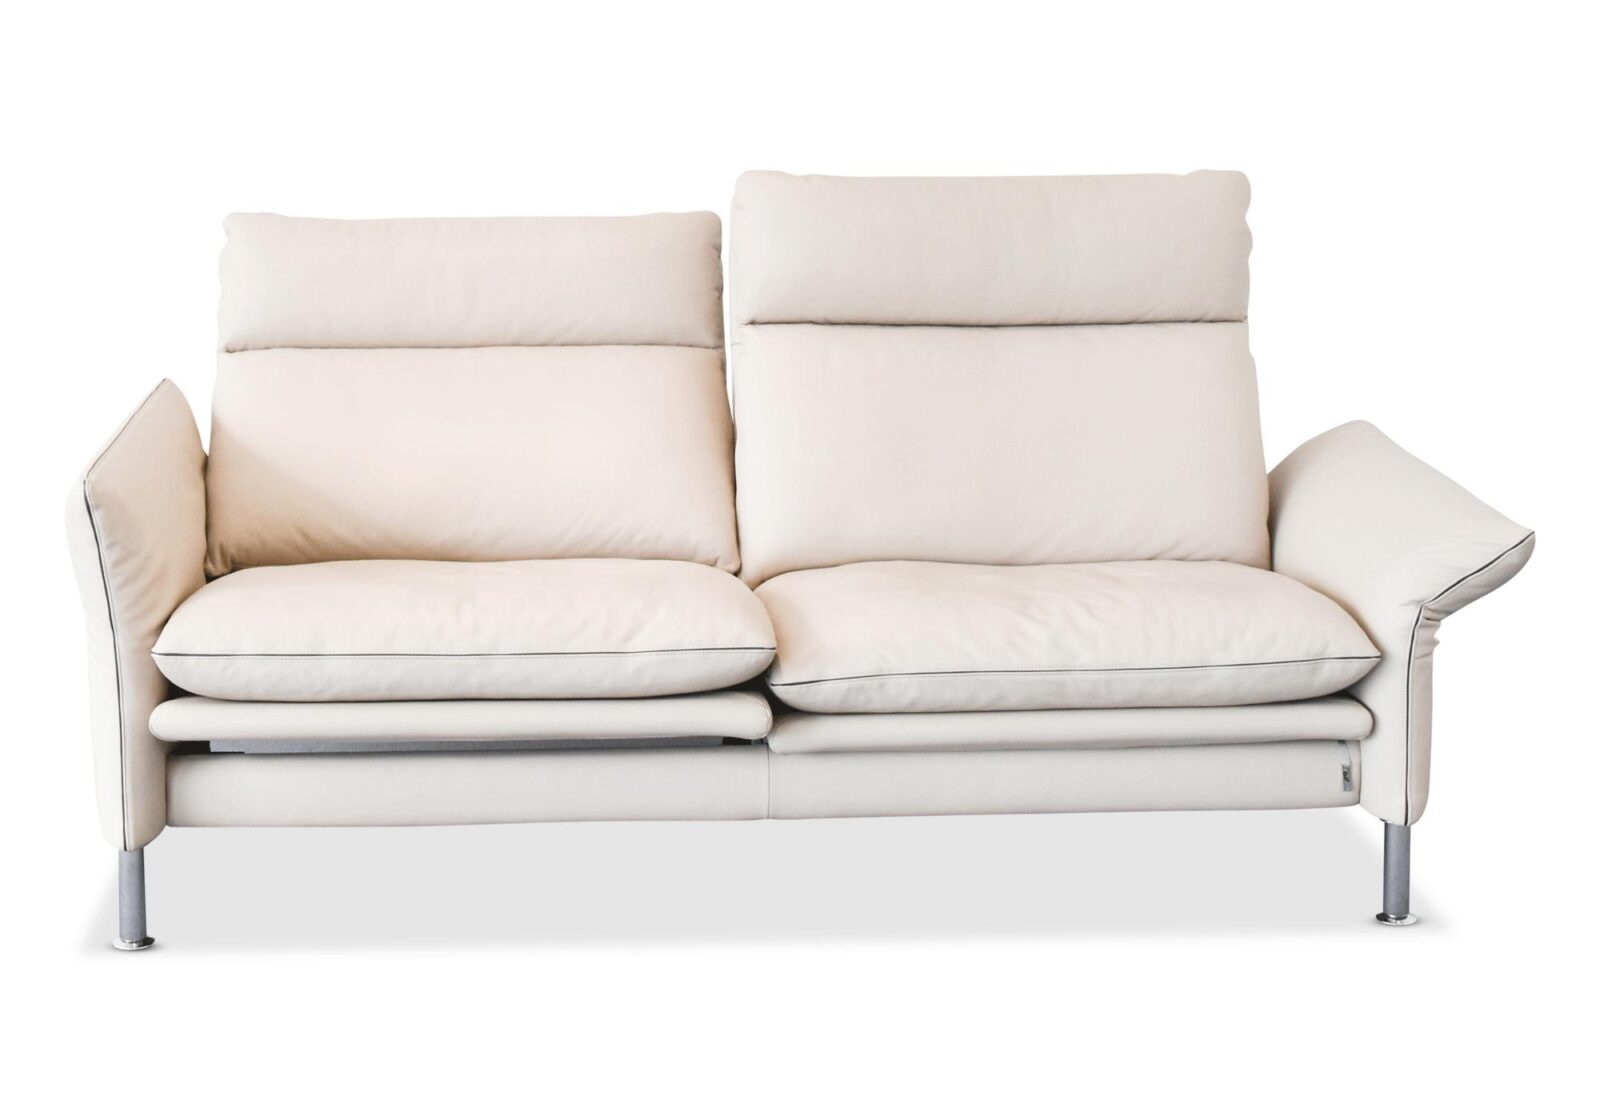 3er Sofa Mesocco  verstellbar. Bezug: Leder. Farbe: Mocca. Erhältlich bei Möbel Gallati.